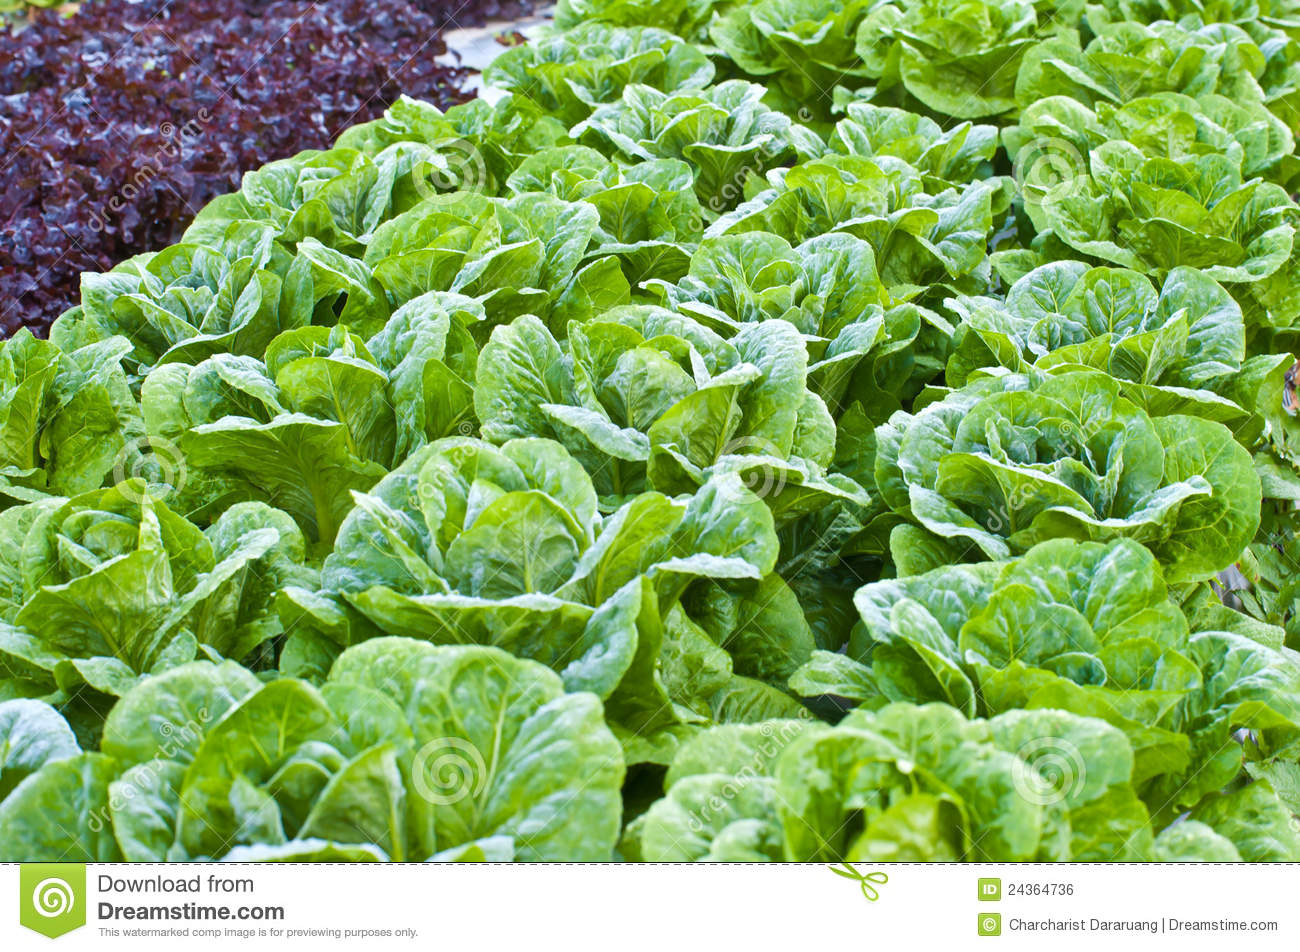 Green Kale Royalty Free Stock Image   Image  24364736